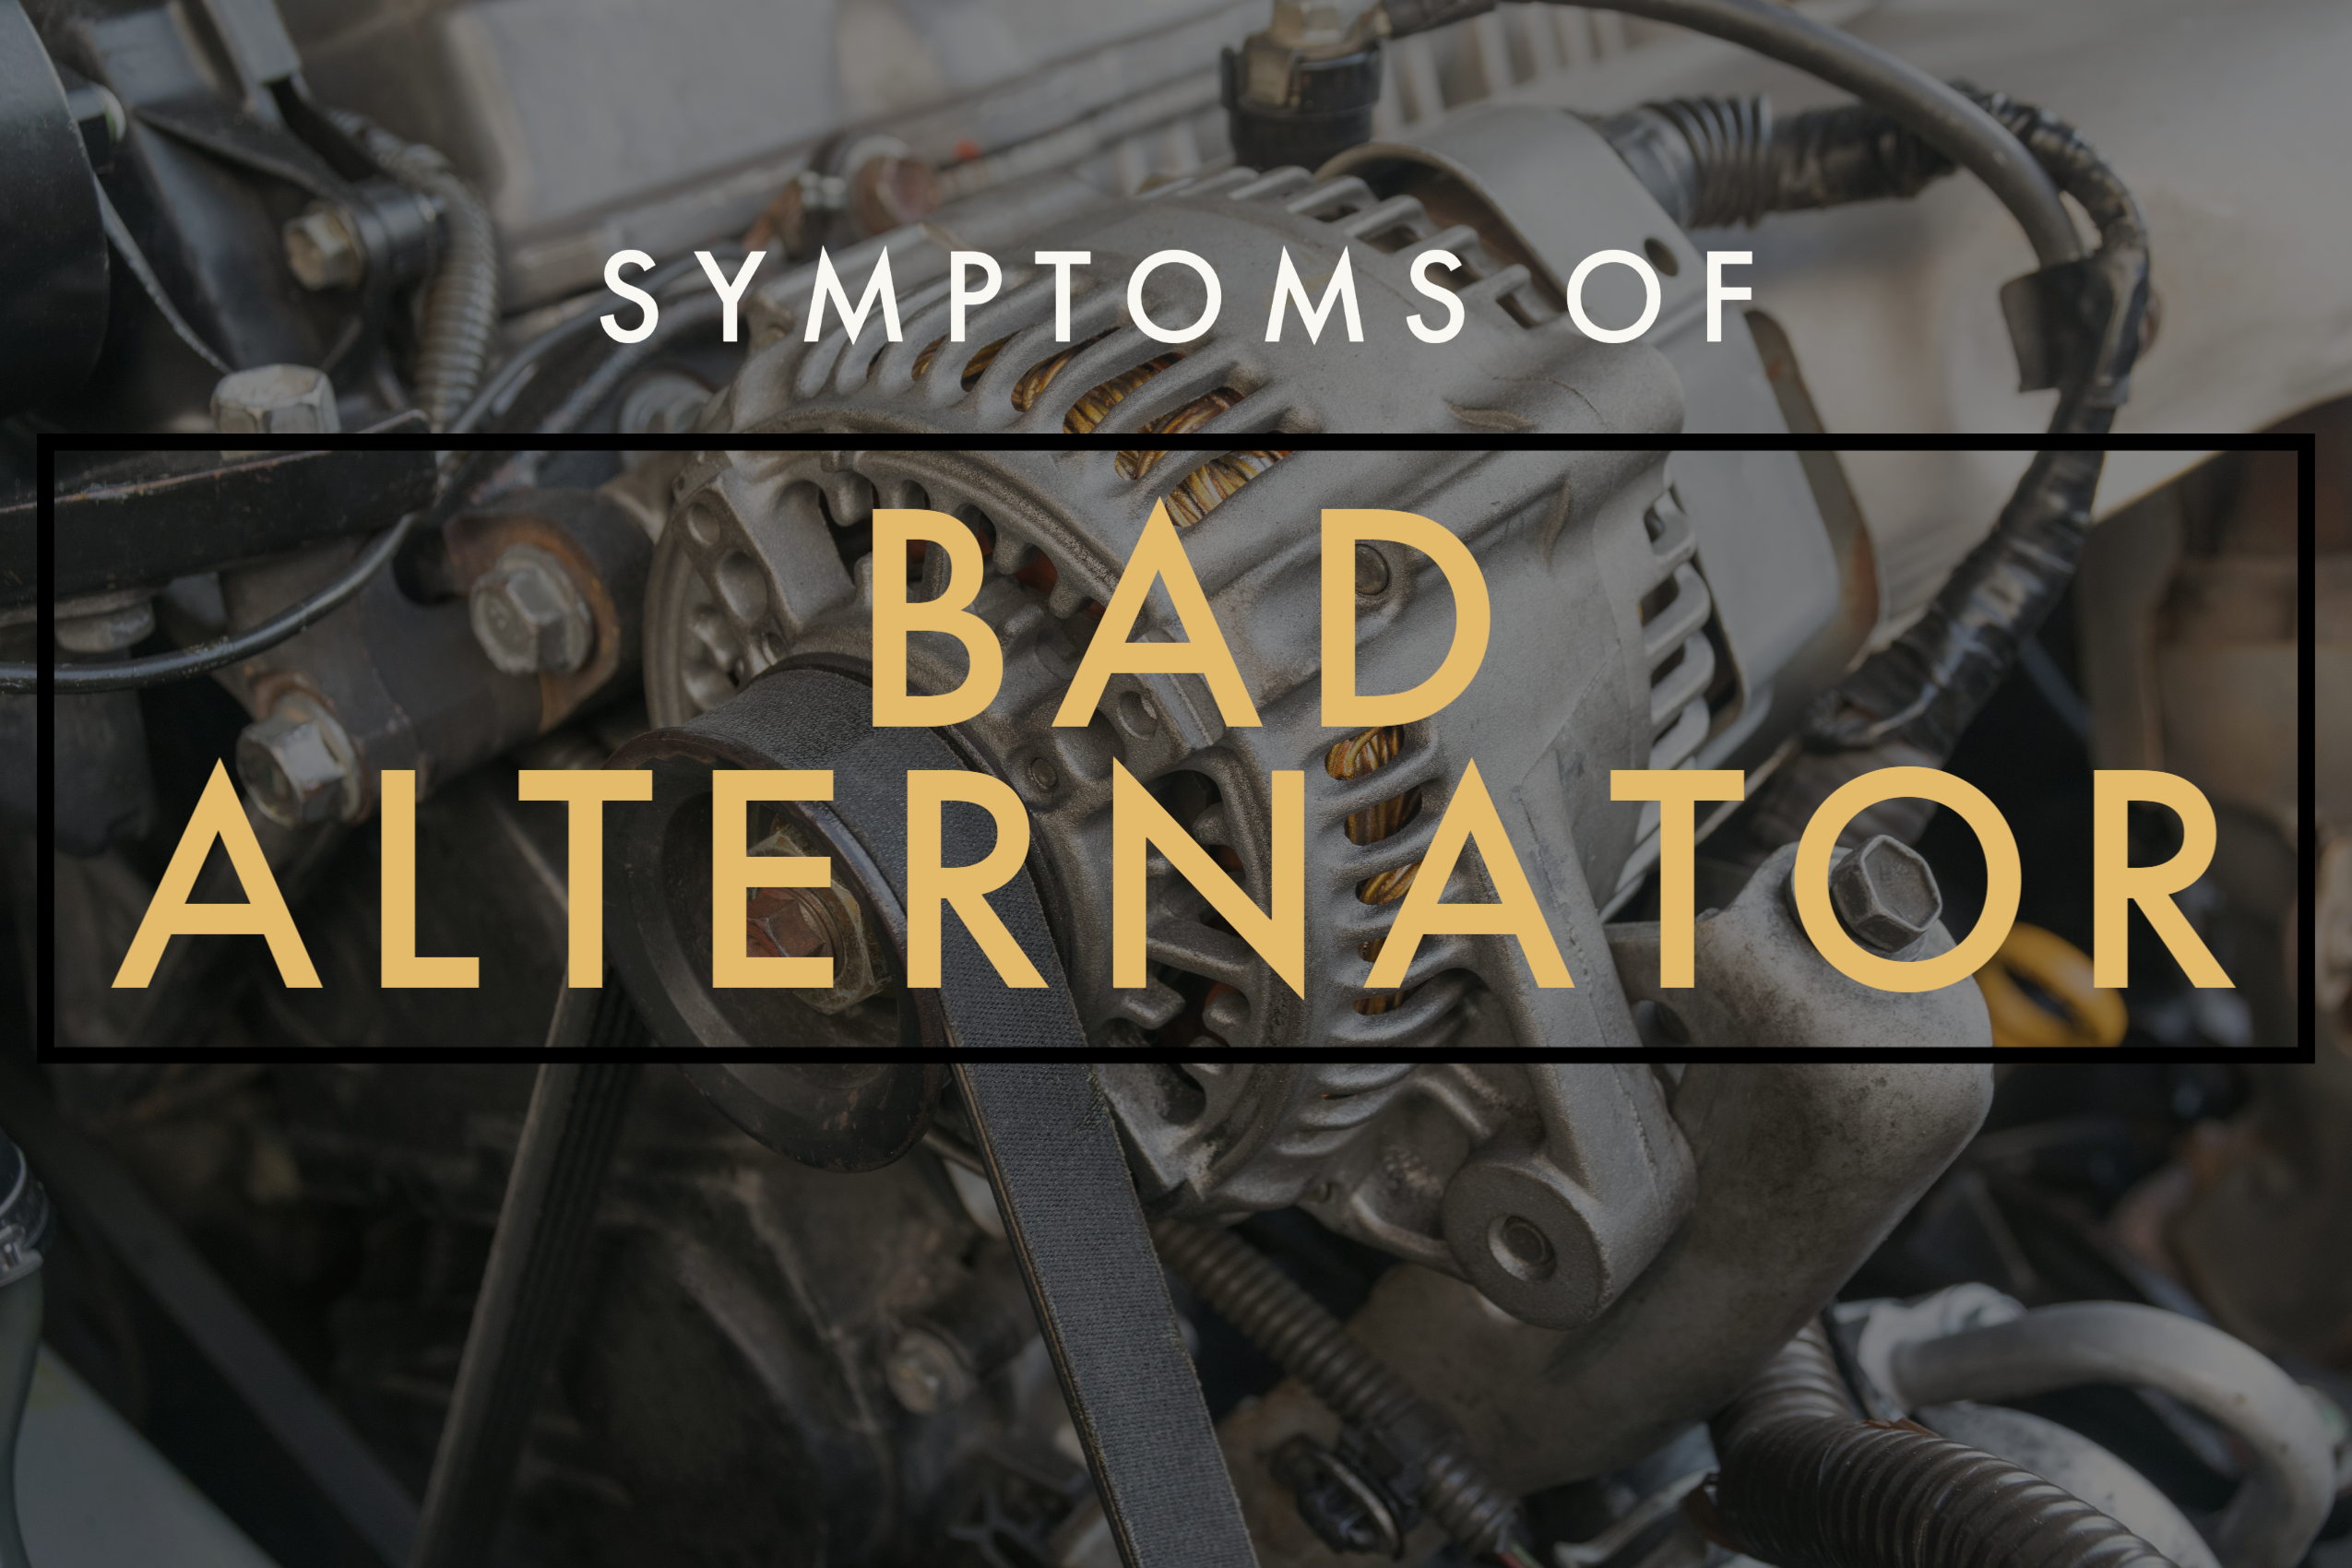 Symptoms of a bad Alternator